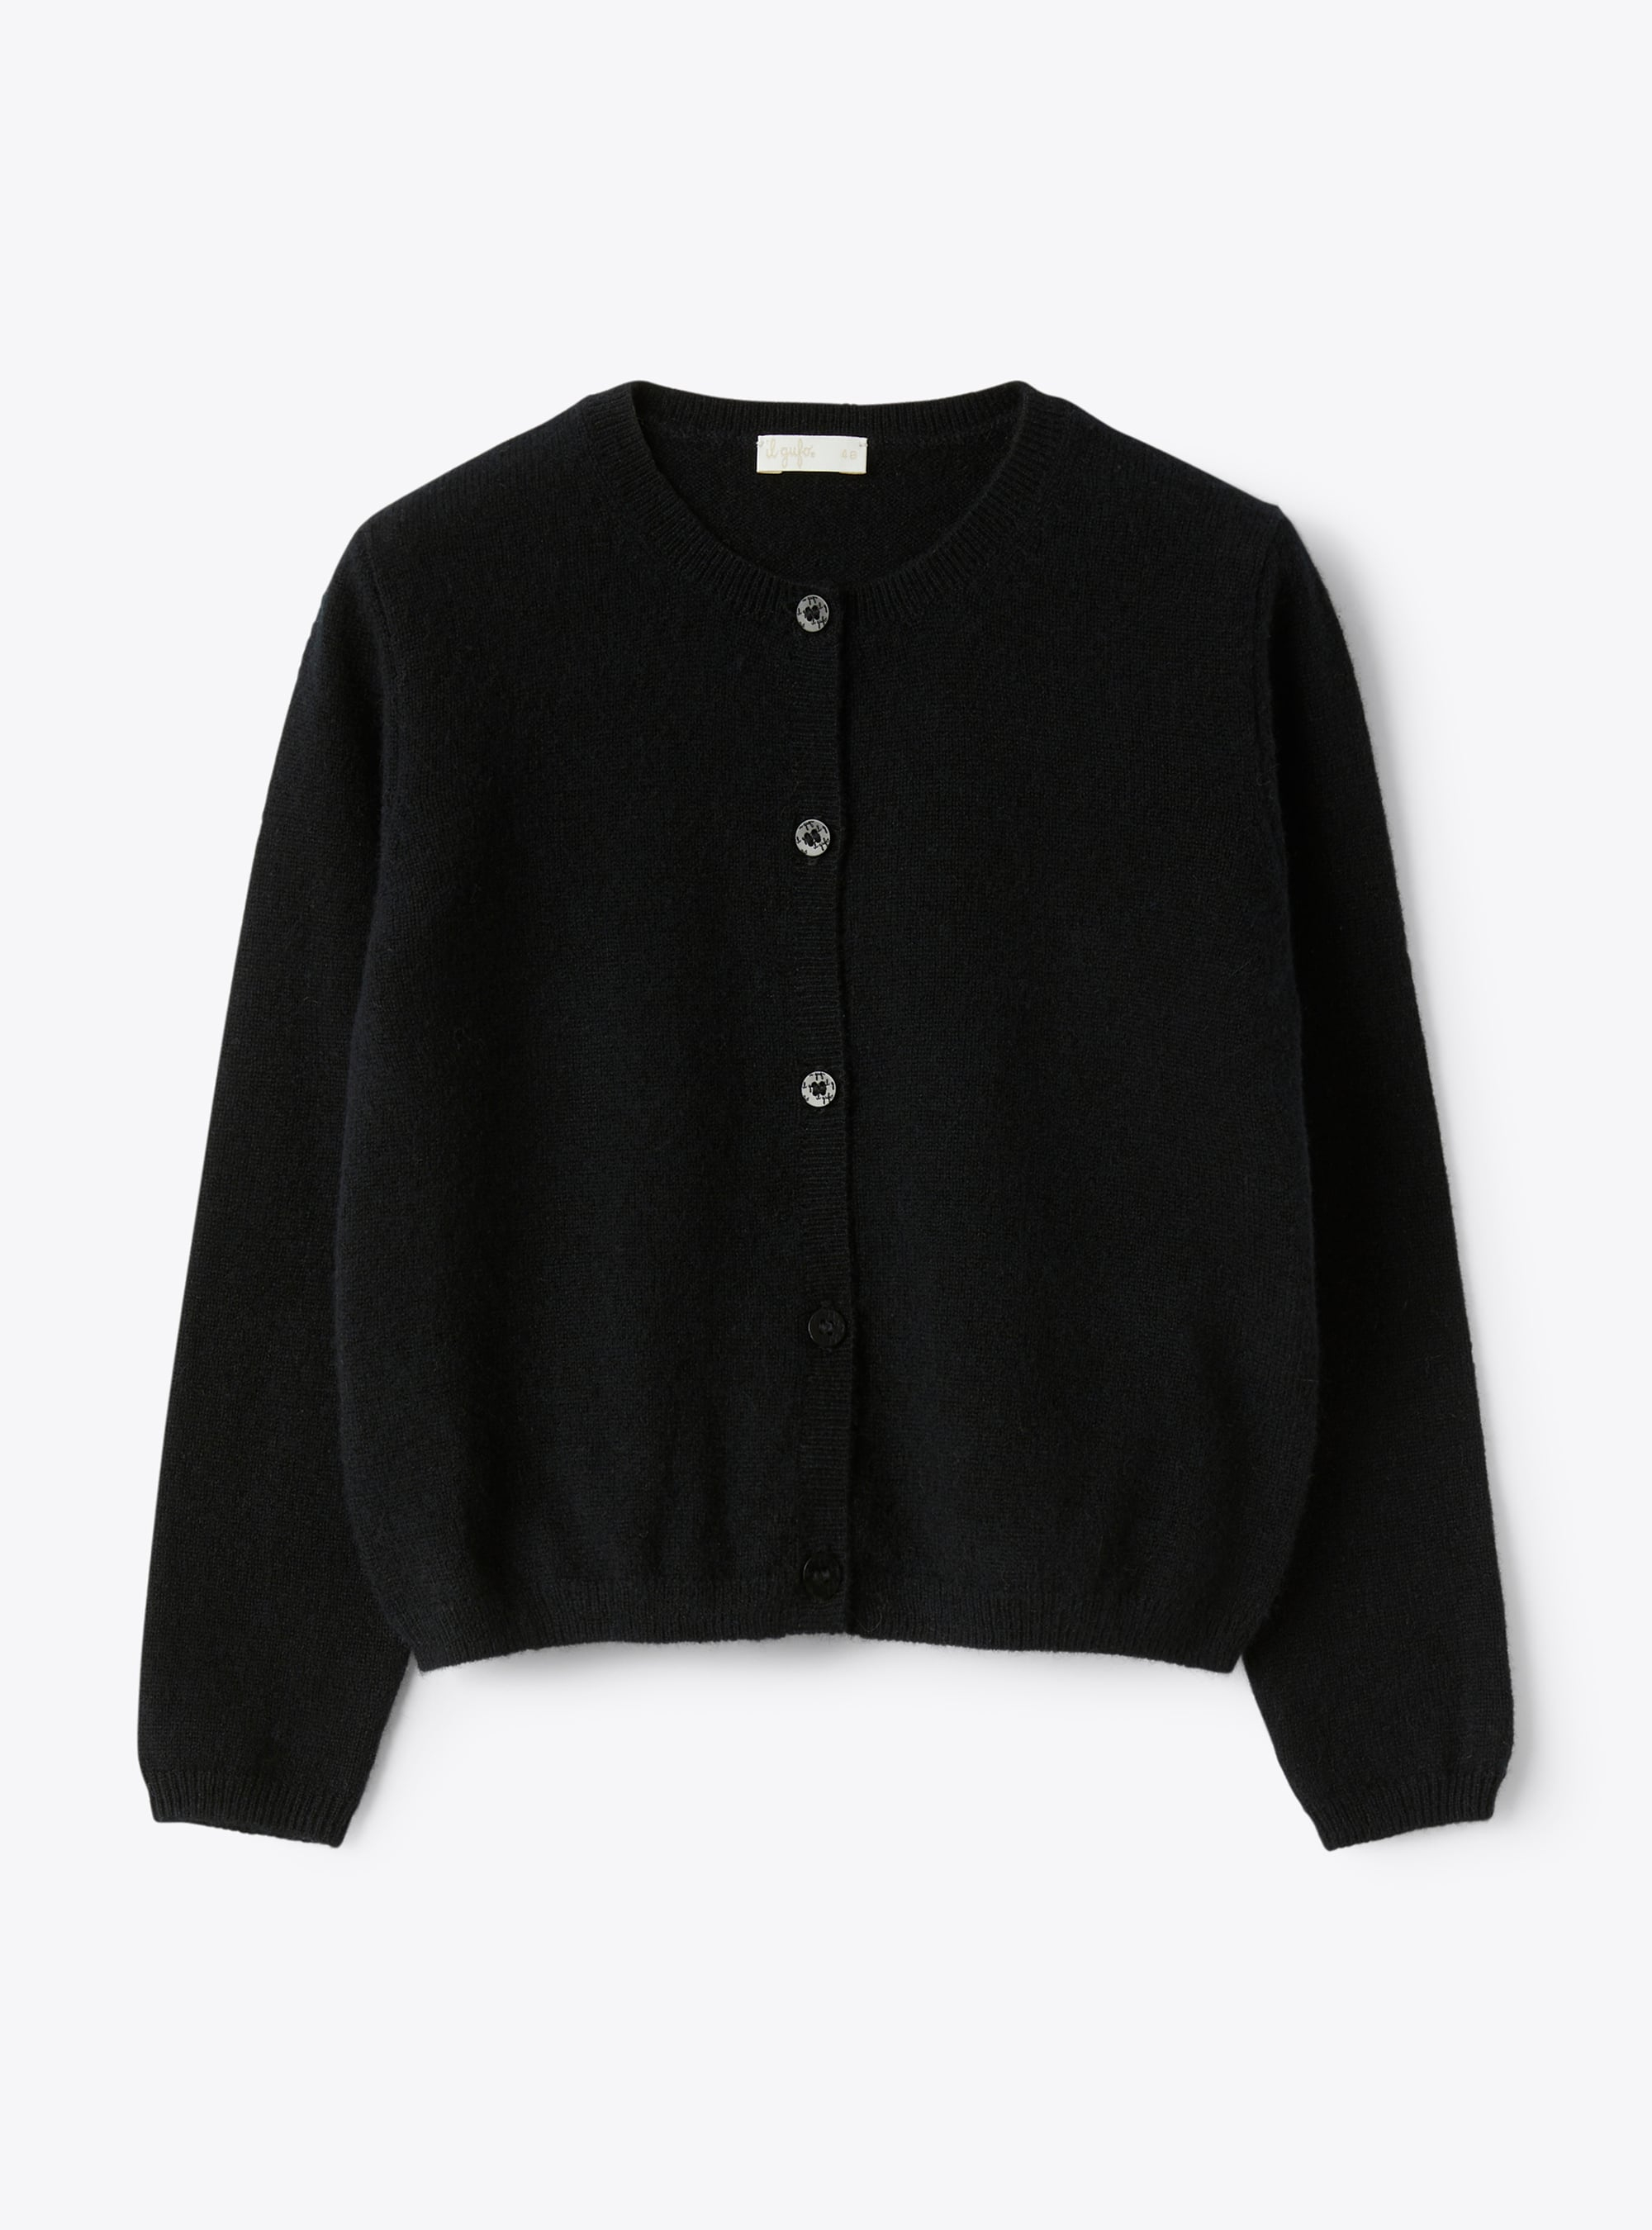 Black cashmere cardigan - Sweaters - Il Gufo